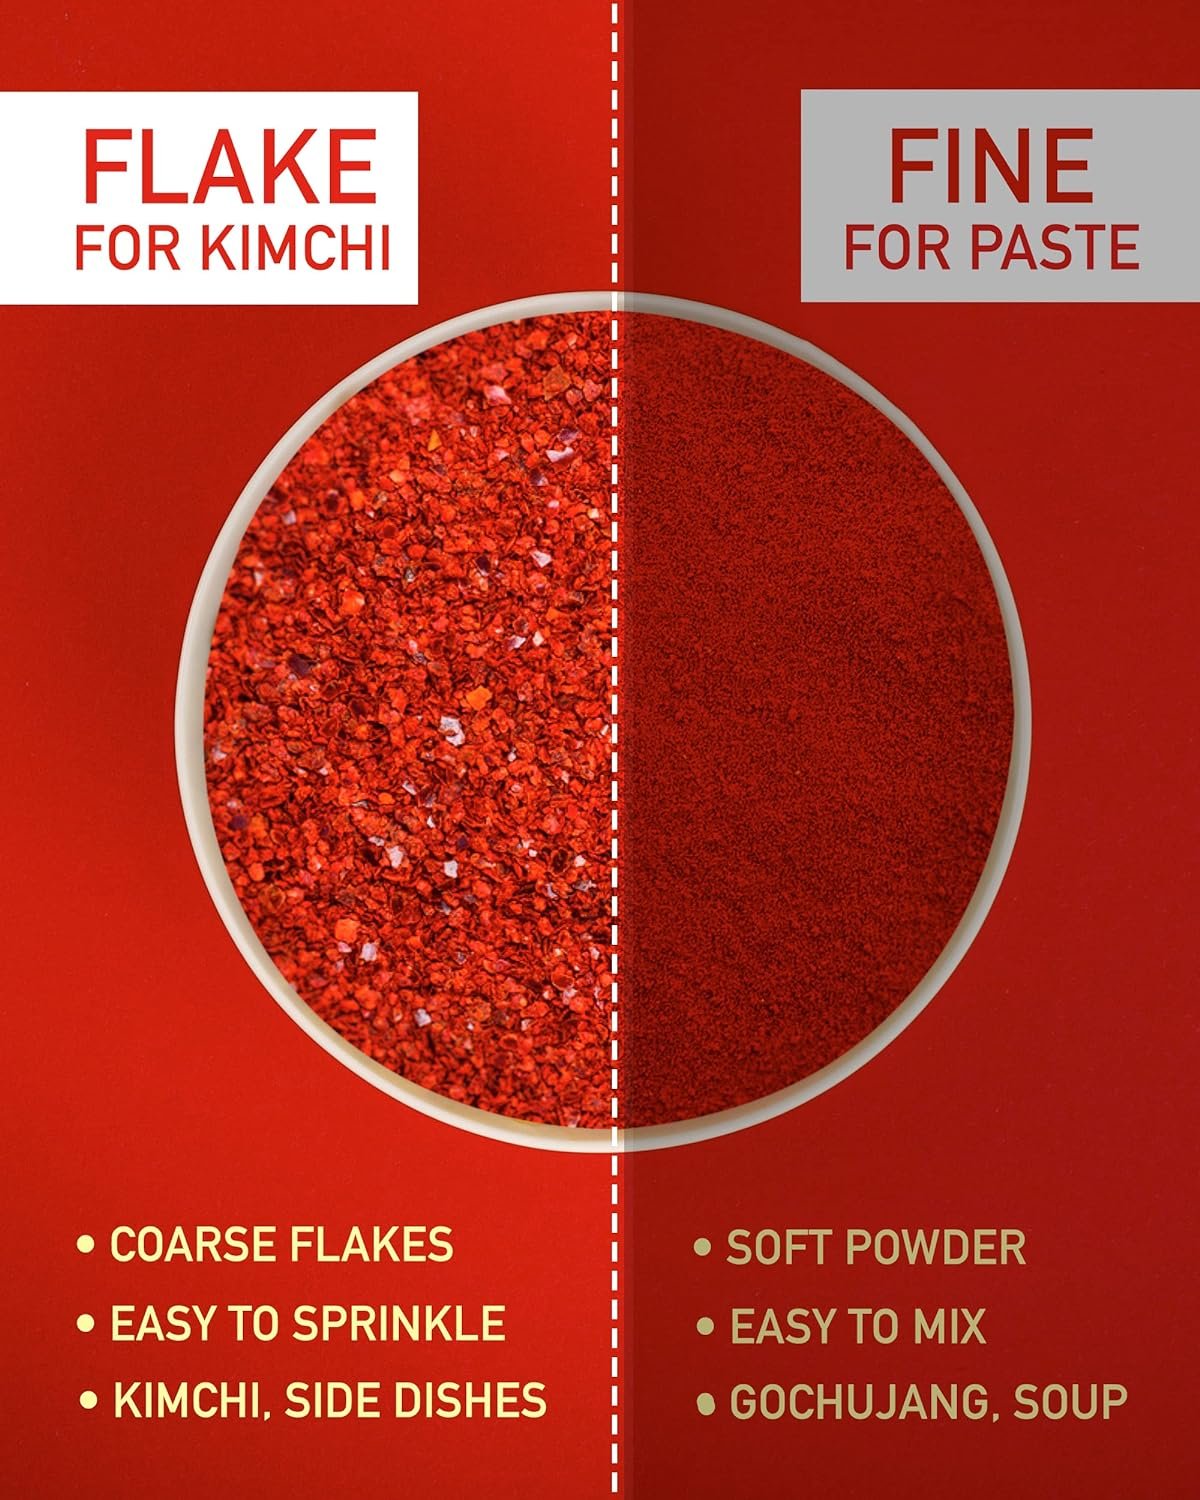 NONGSHIM TAEKYUNG Korean Chili Powder, Gochugaru Chili Flakes. Kimchi Powder (Flake, 1lb) - 100% Red Pepper Flakes for Korean  Asian Food. MSG Free.